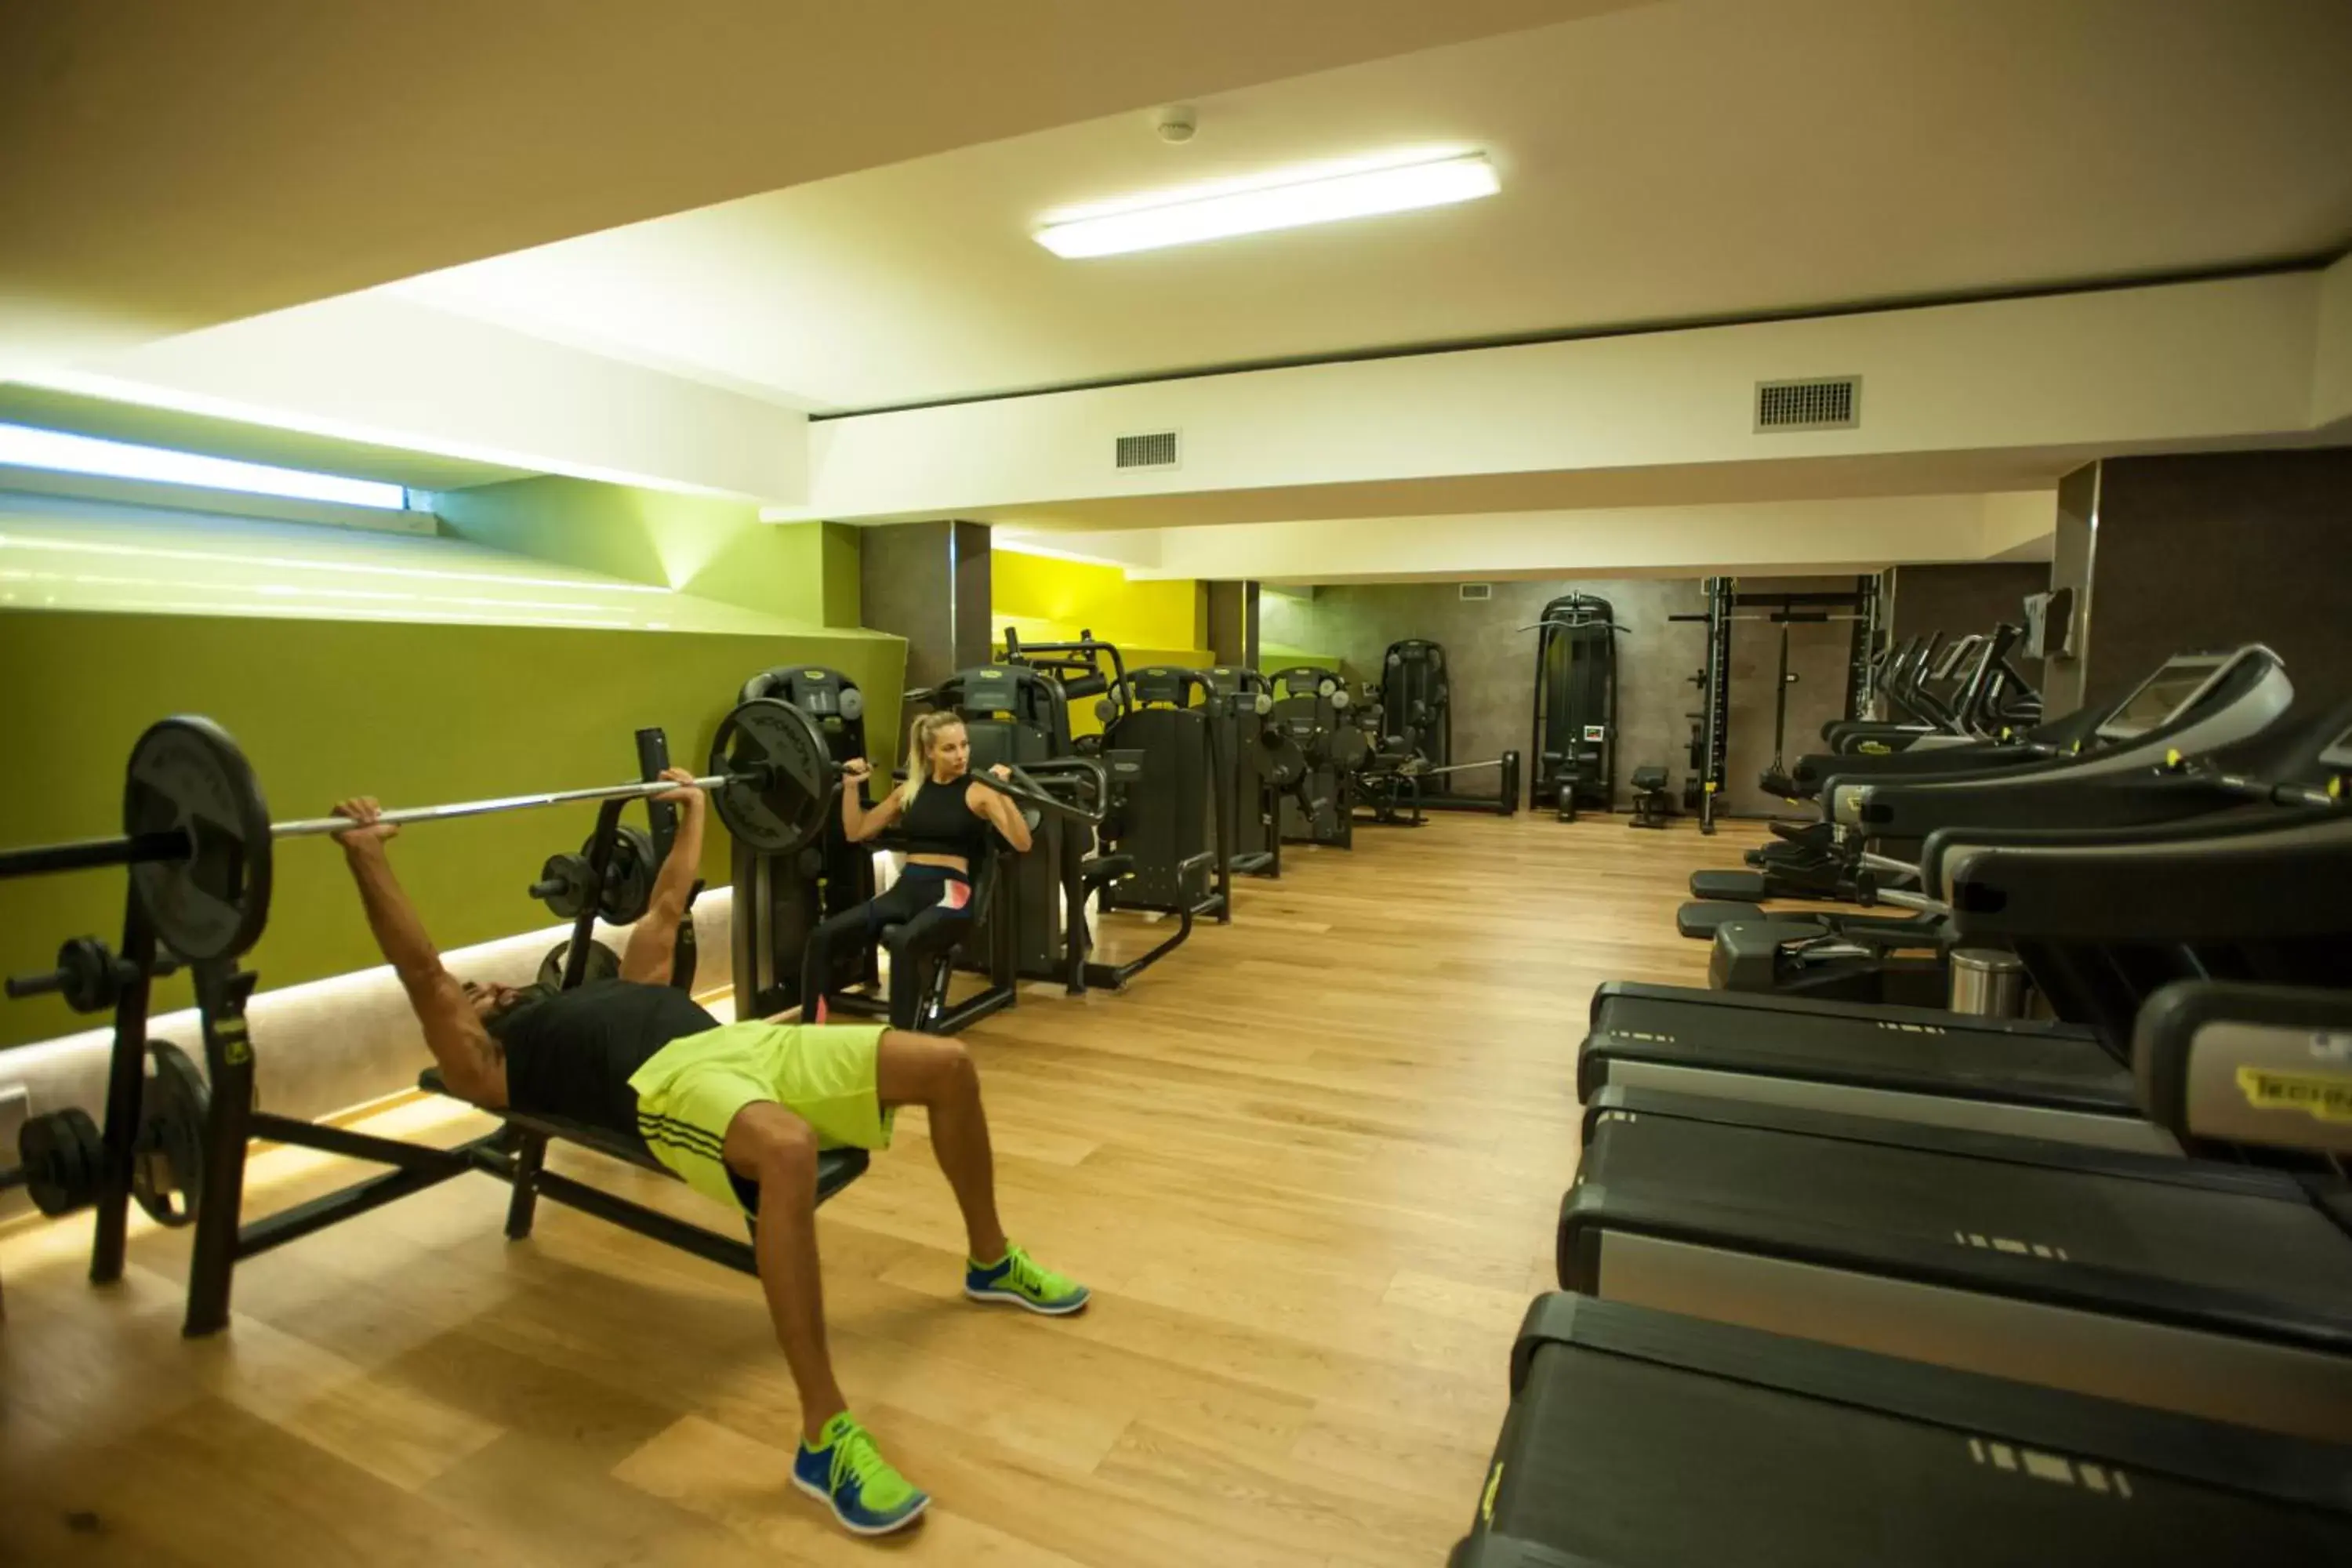 Fitness centre/facilities, Fitness Center/Facilities in Sport Village Hotel & Spa